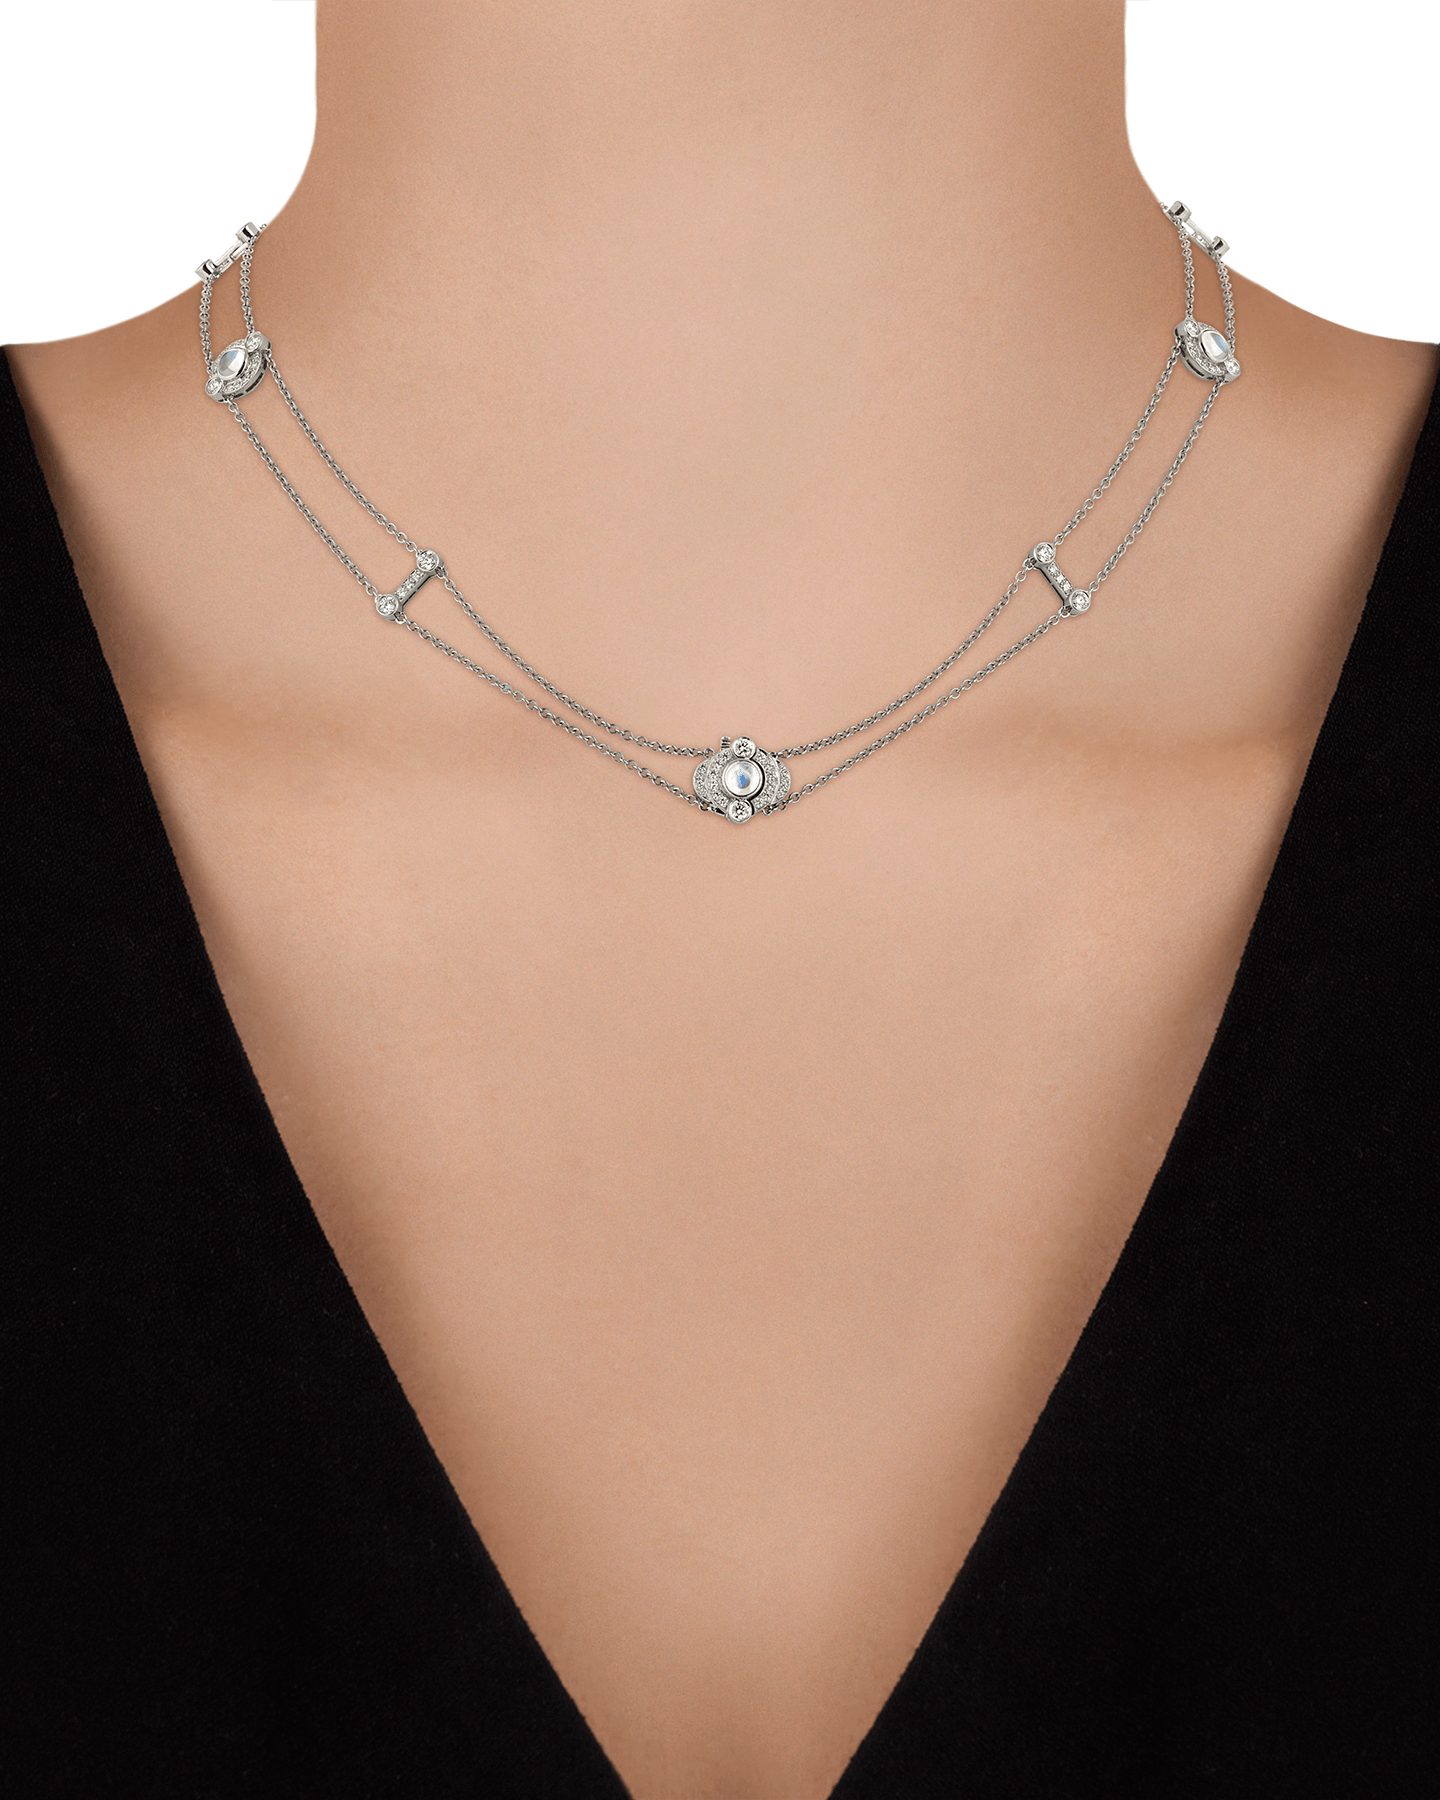 Tiffany & Co. Moonstone and Diamond Double-Strand Necklace